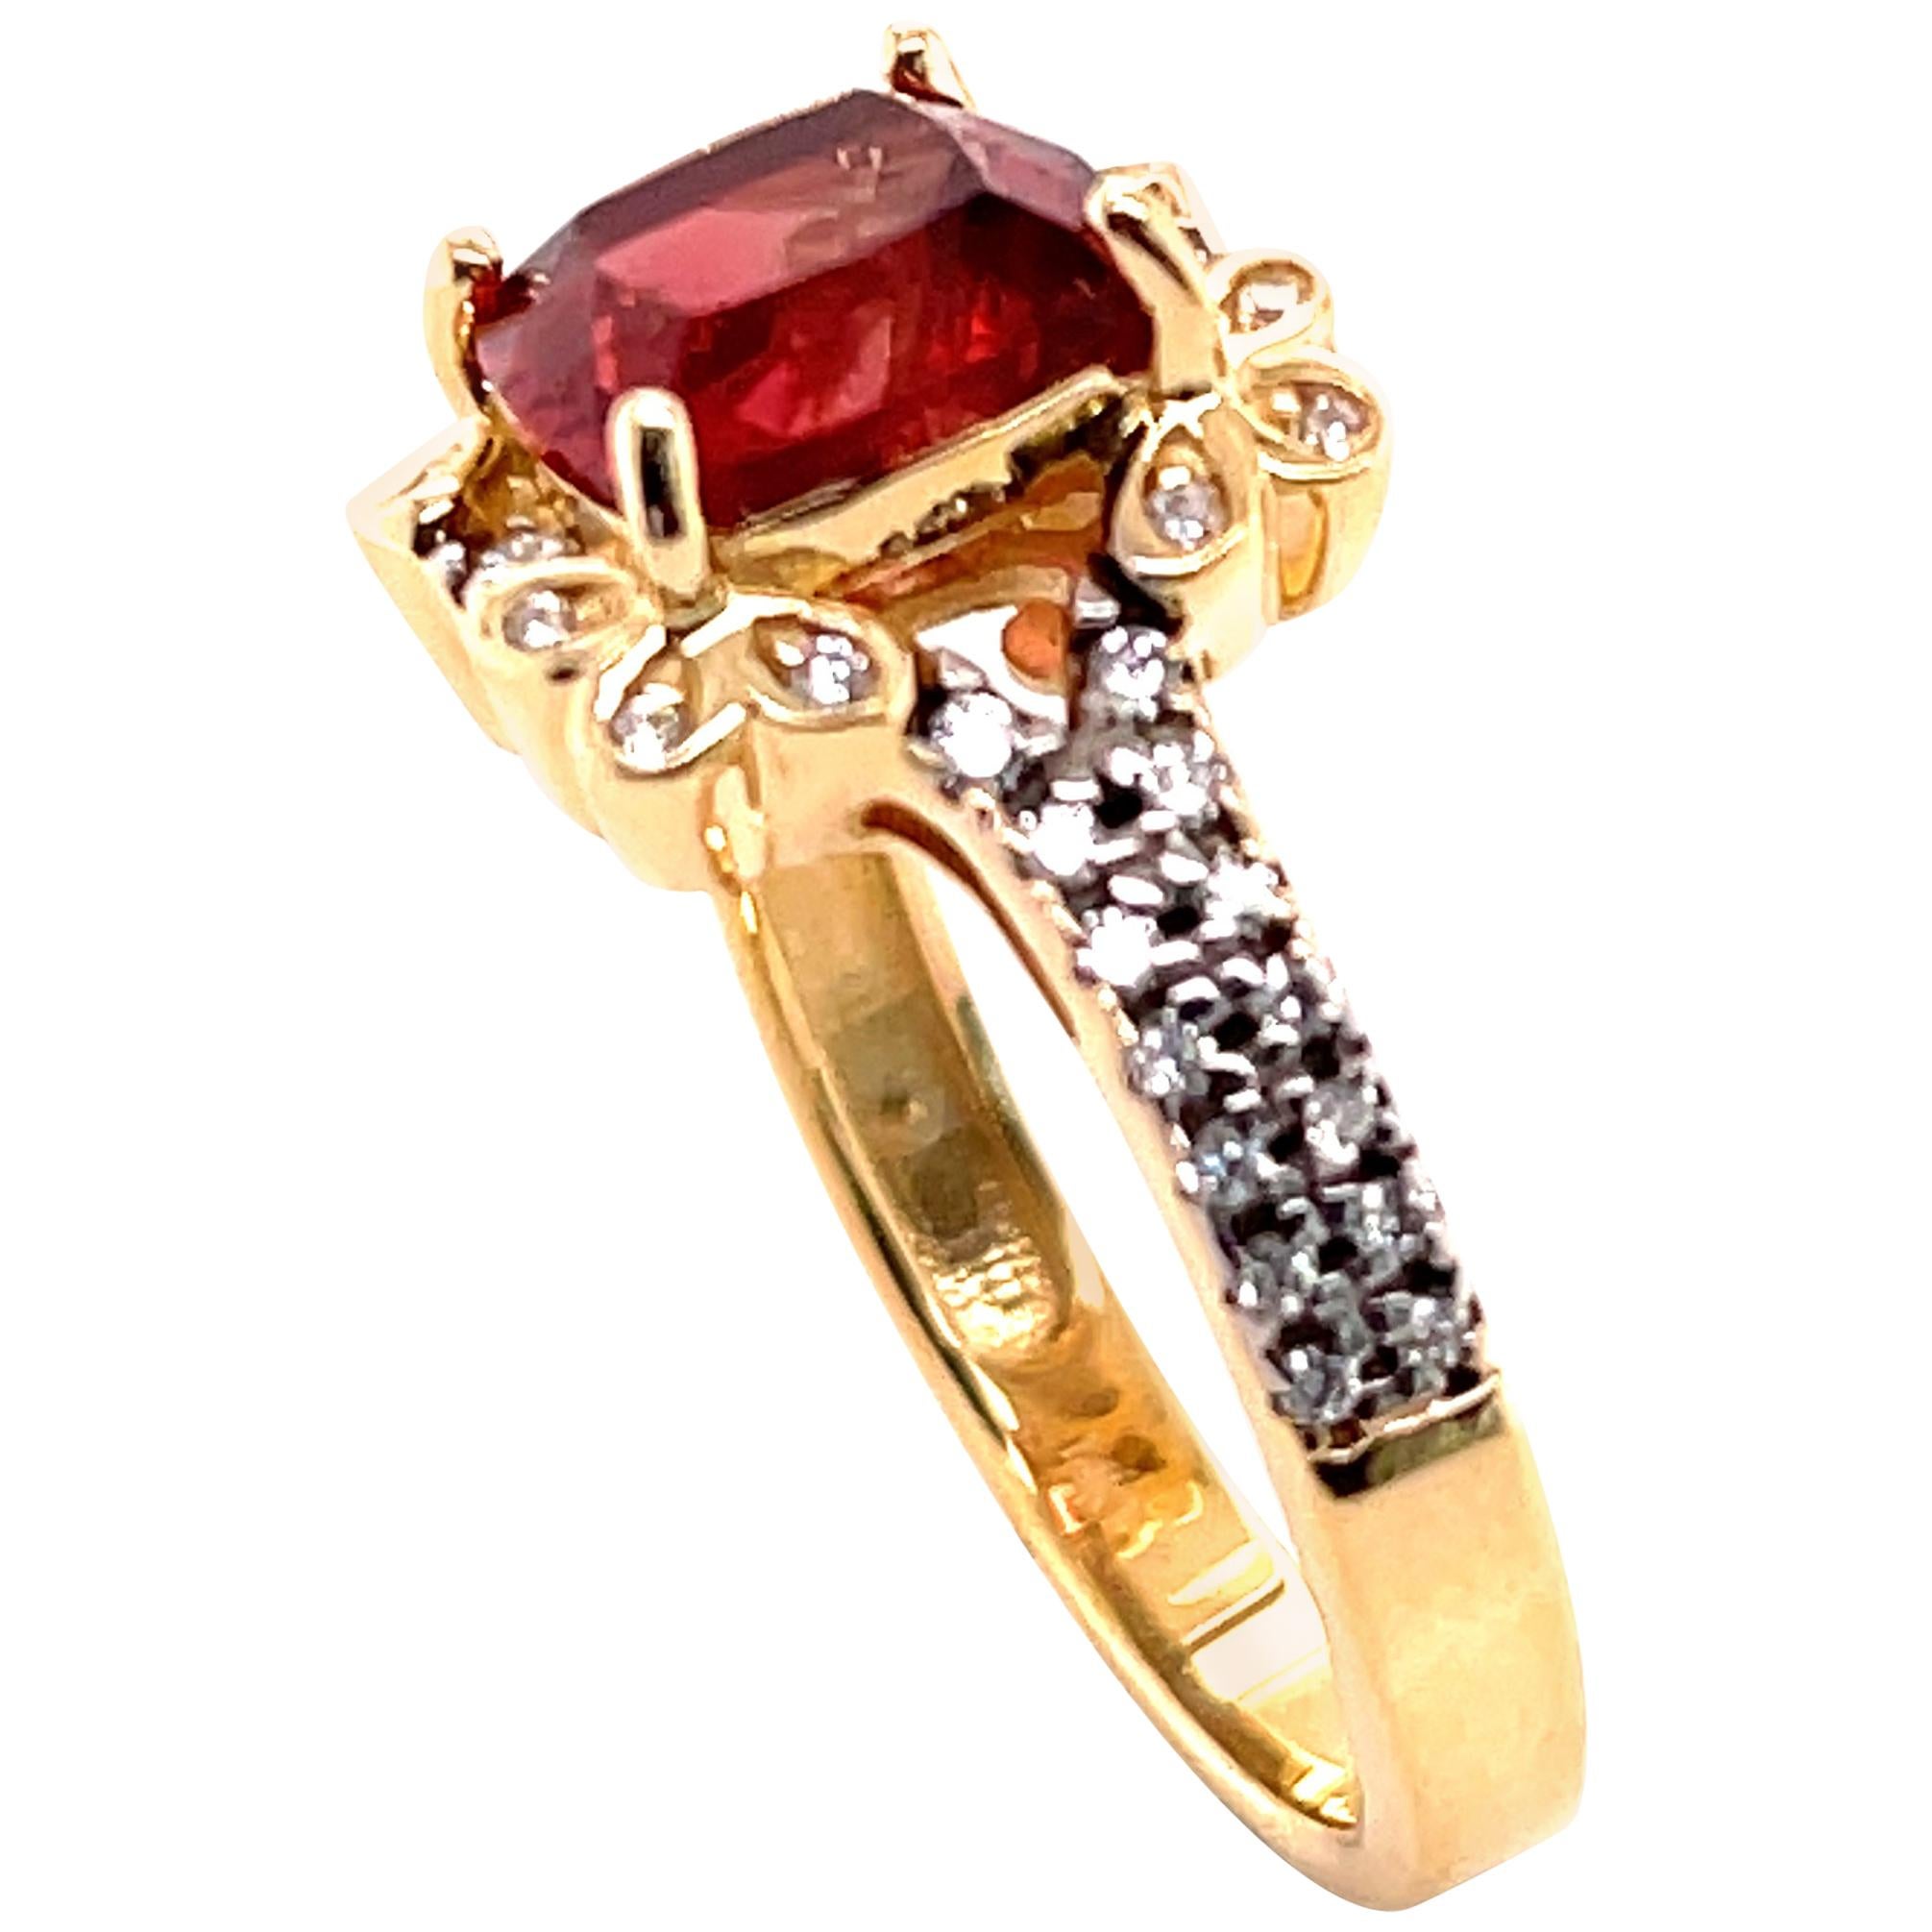  2.14 Carat Oregon Sunstone Gold Ring with Diamonds